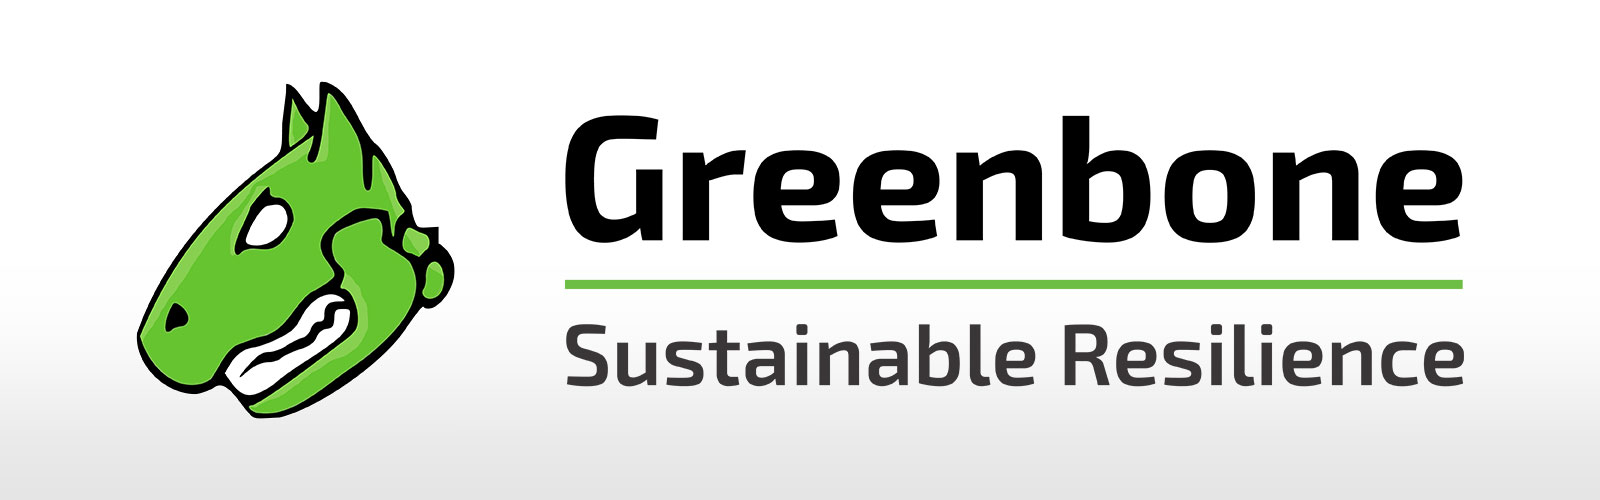 Greenbone - Résilience durable